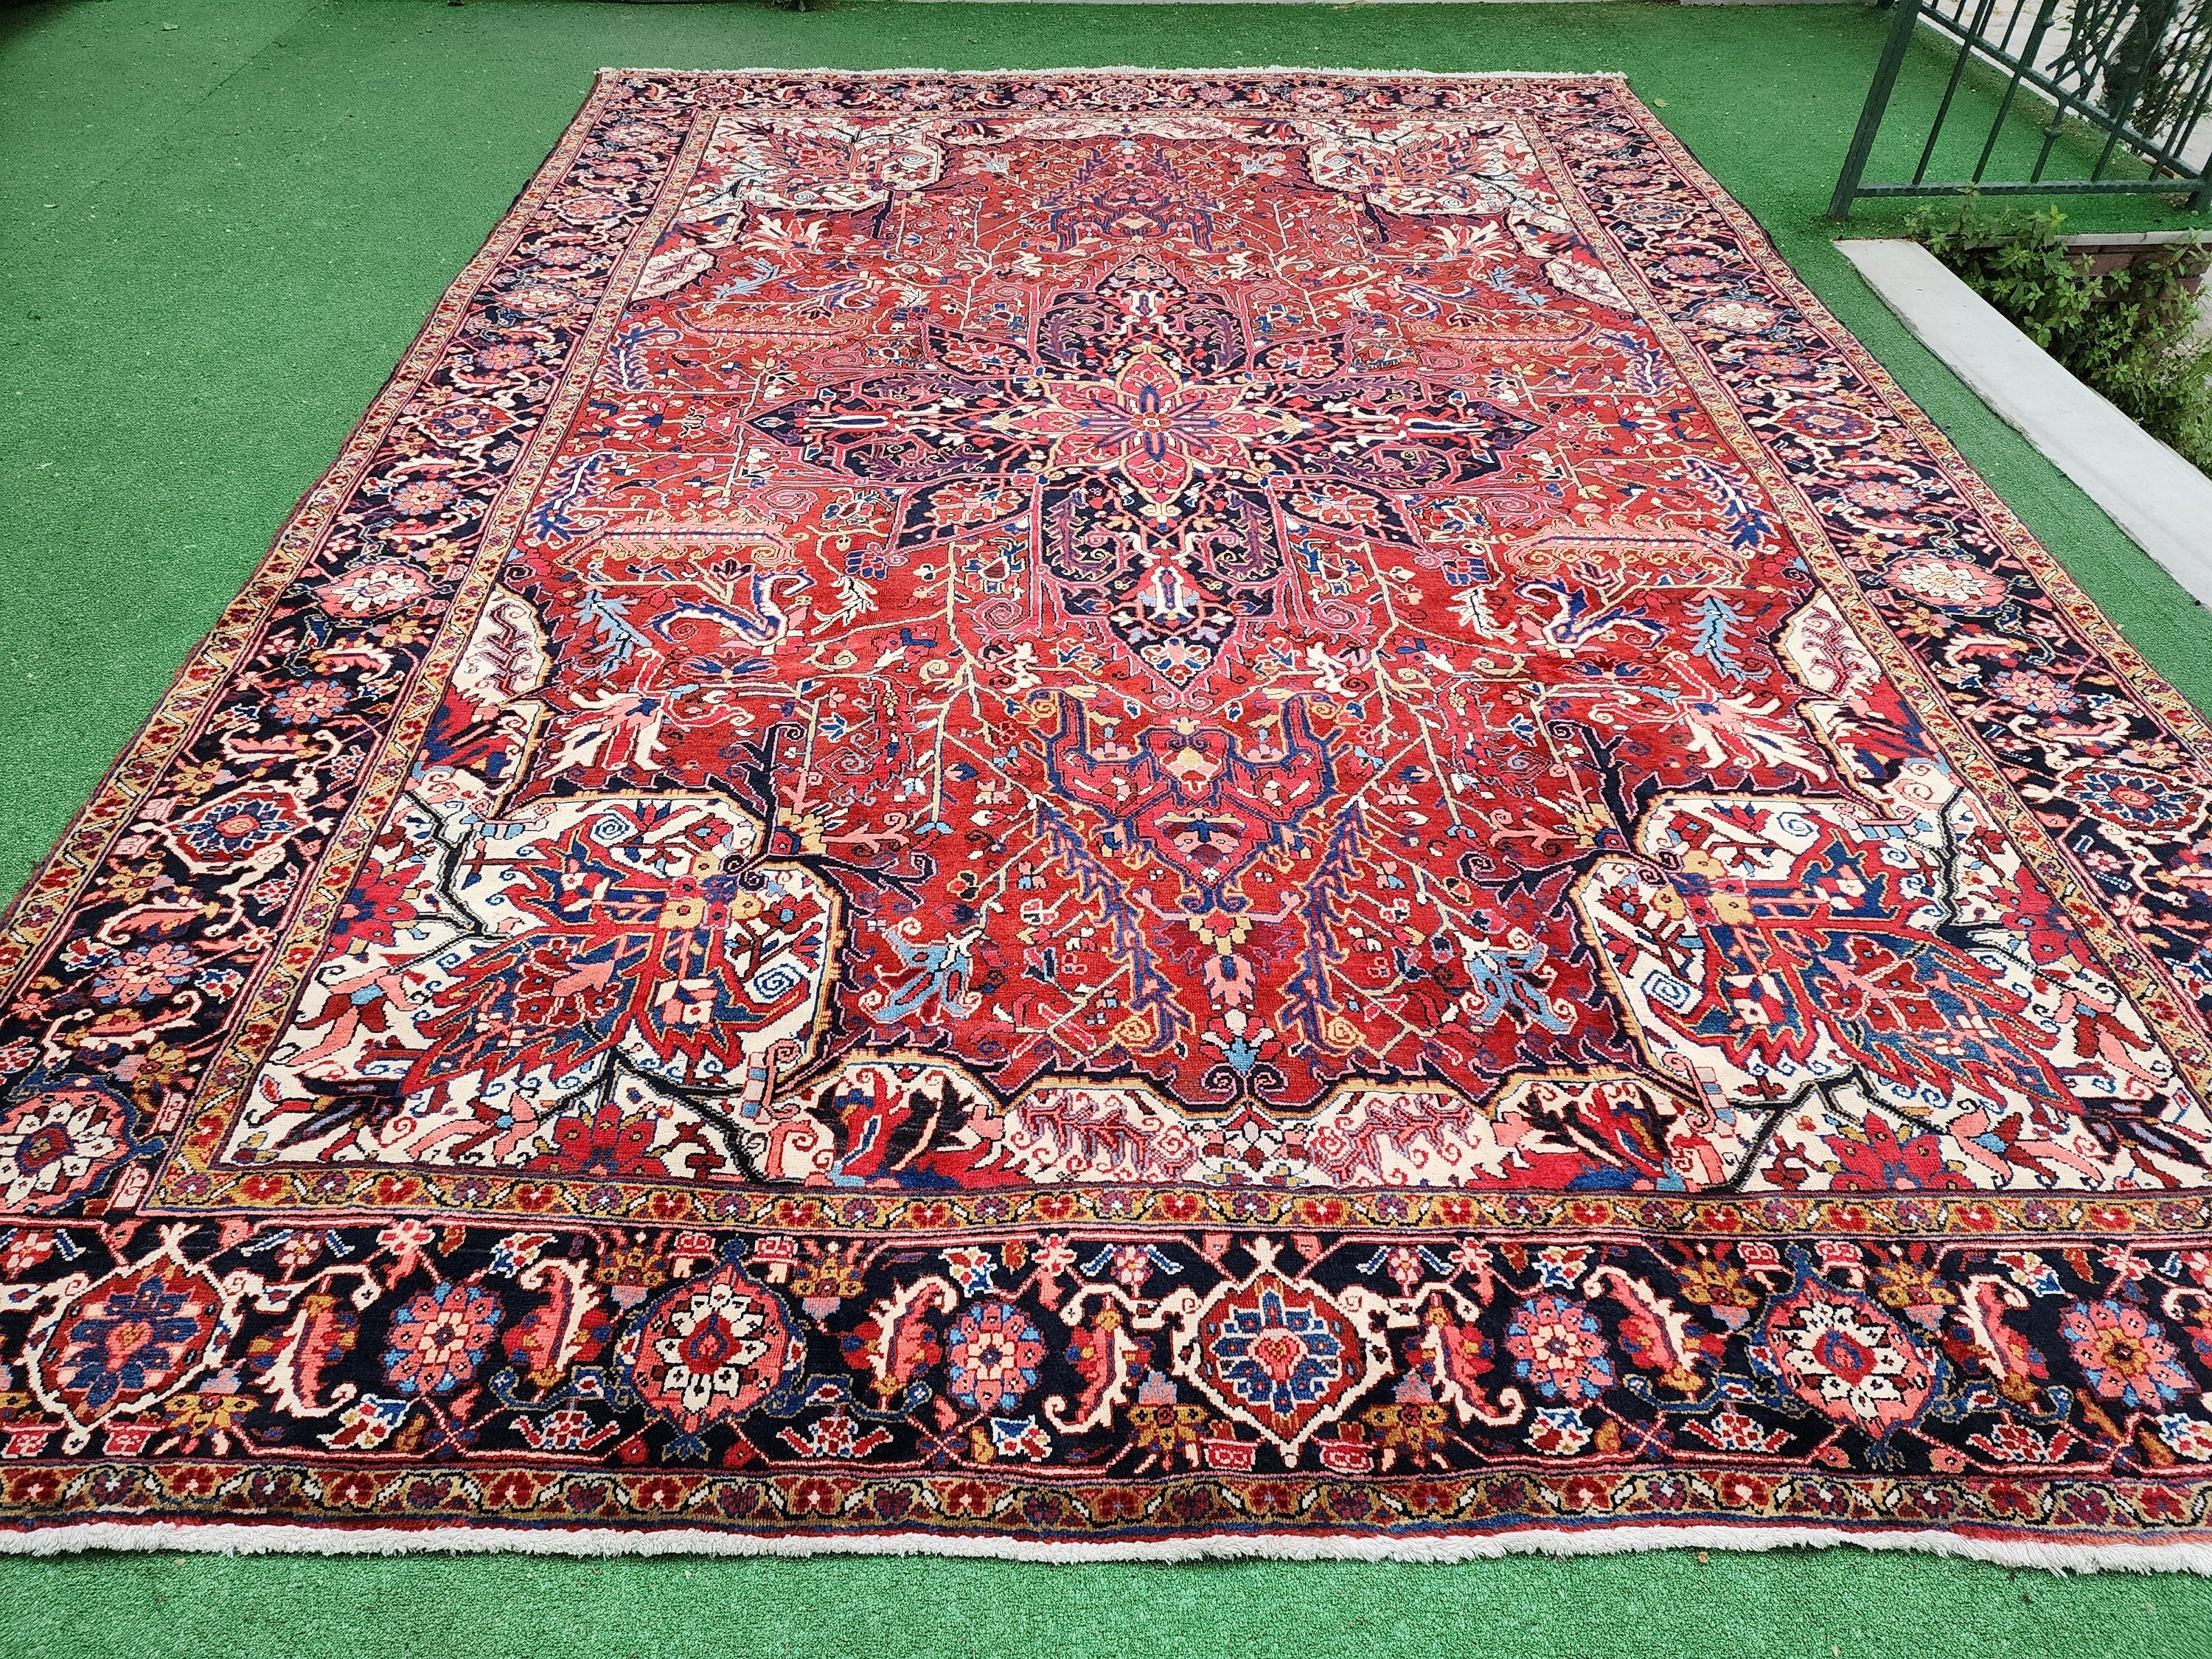 Red and Blue Persian Area Rug, 13 x 9 ft Vintage Turkish Tribal Organic Wool Rug, Recycled Oriental Design Rustic Floor Rug